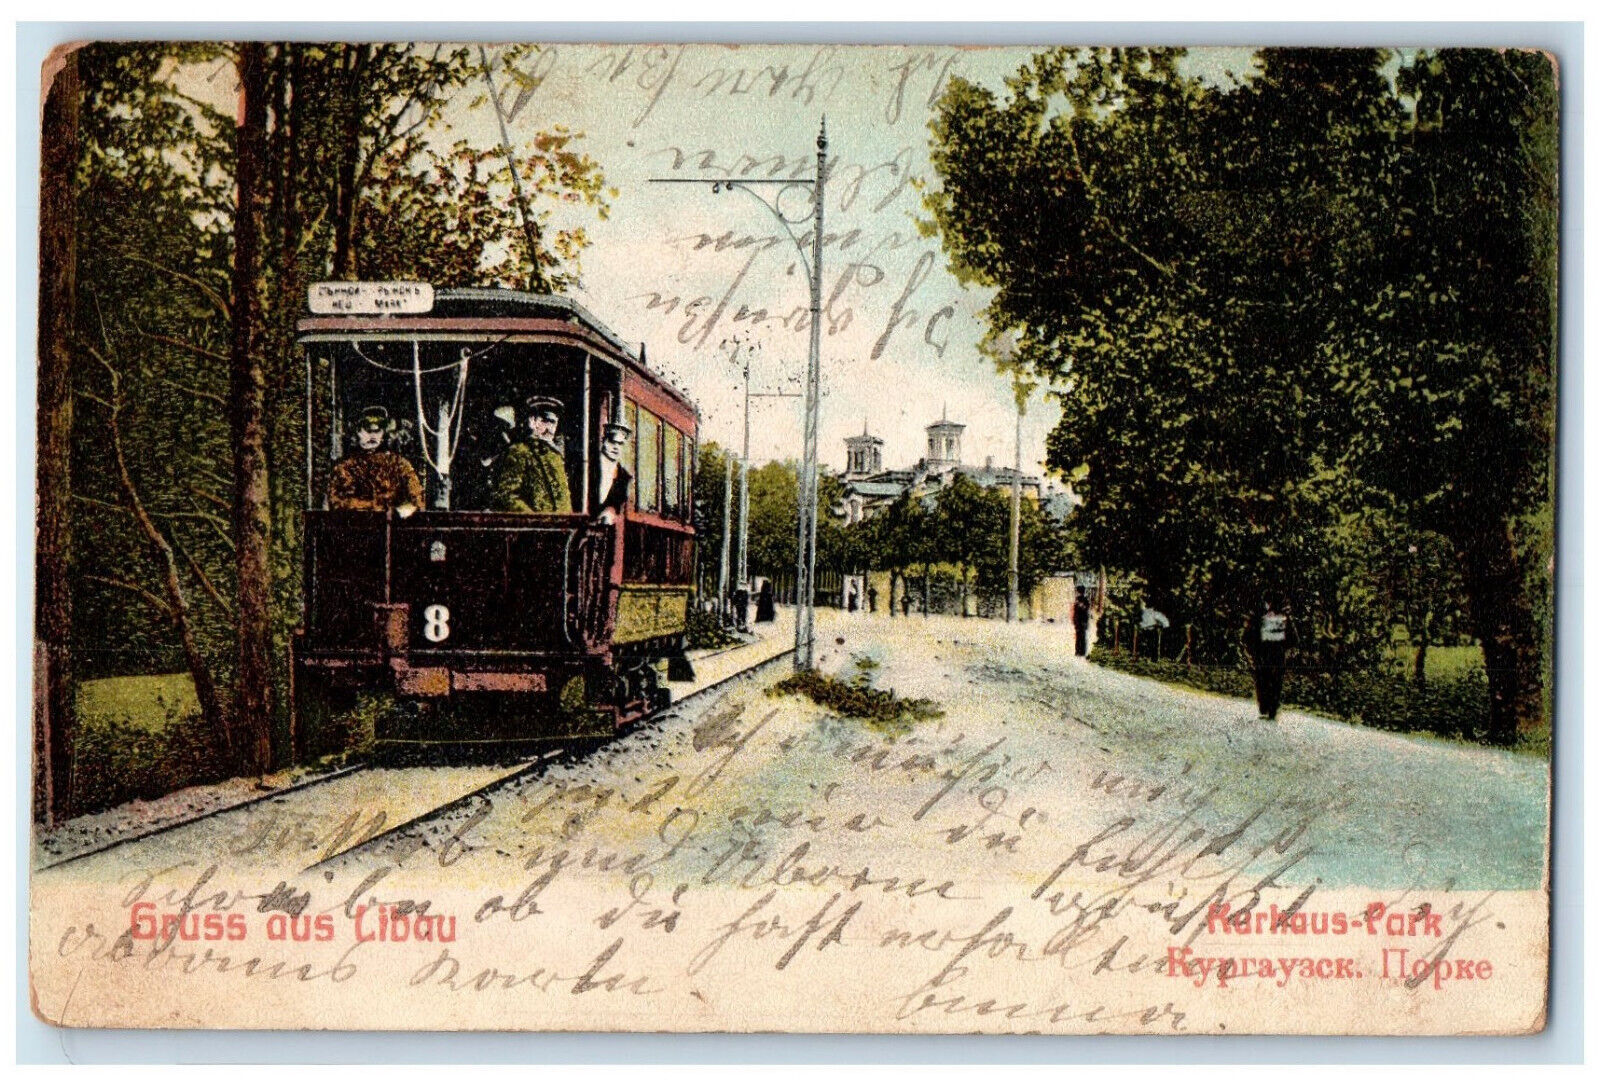 1906 Trolley StreetCar Kerhaus Park Gruss Aus Libau Latvia Russia Postcard